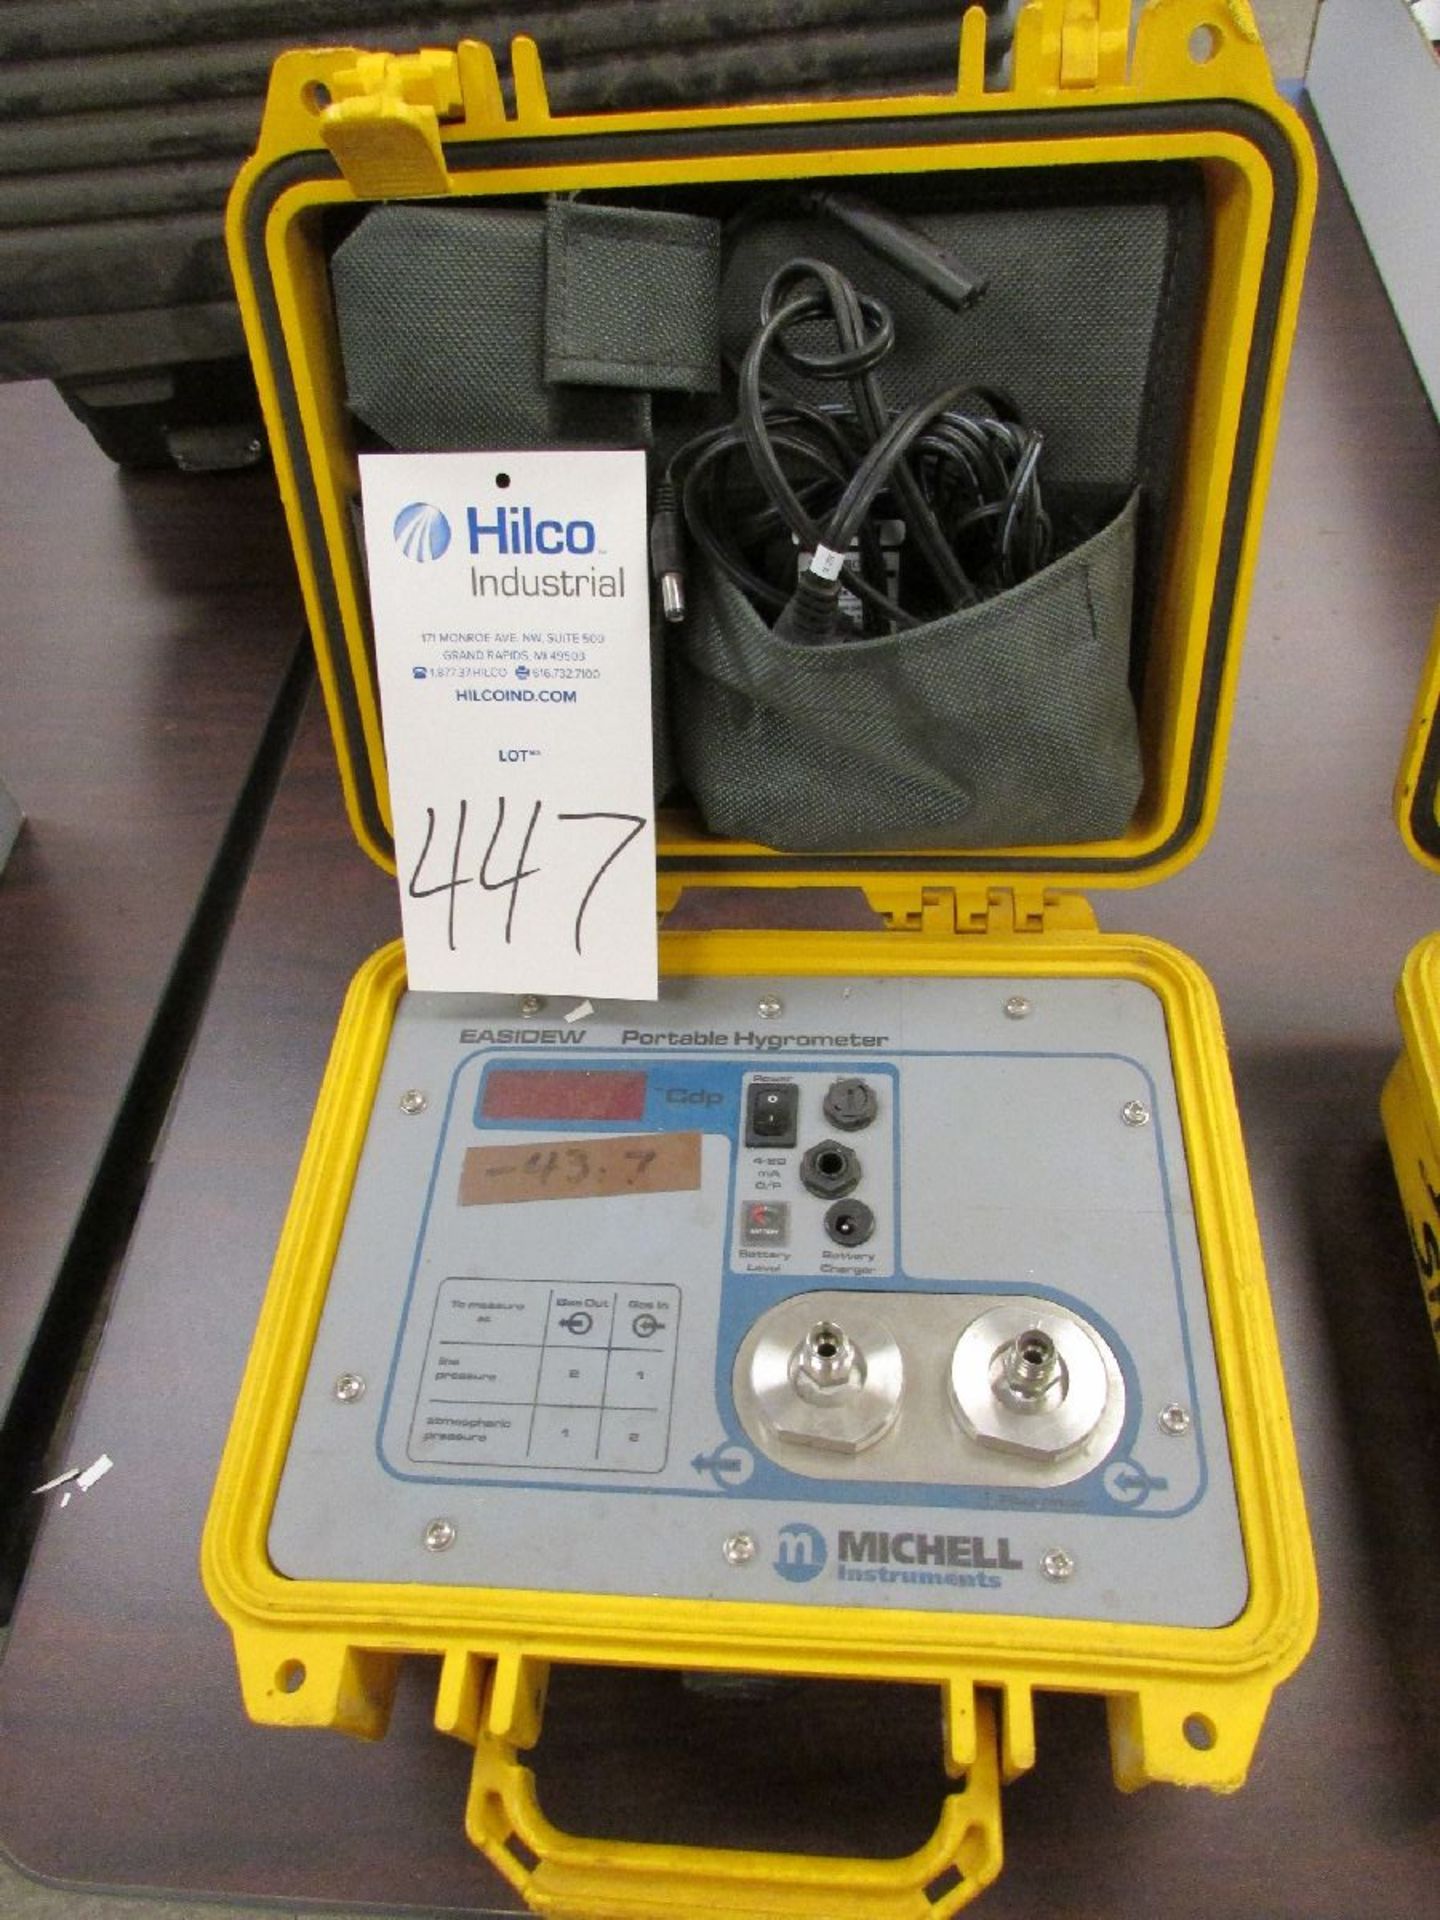 Michell Instruments Model Easidew Portable Hygrometer